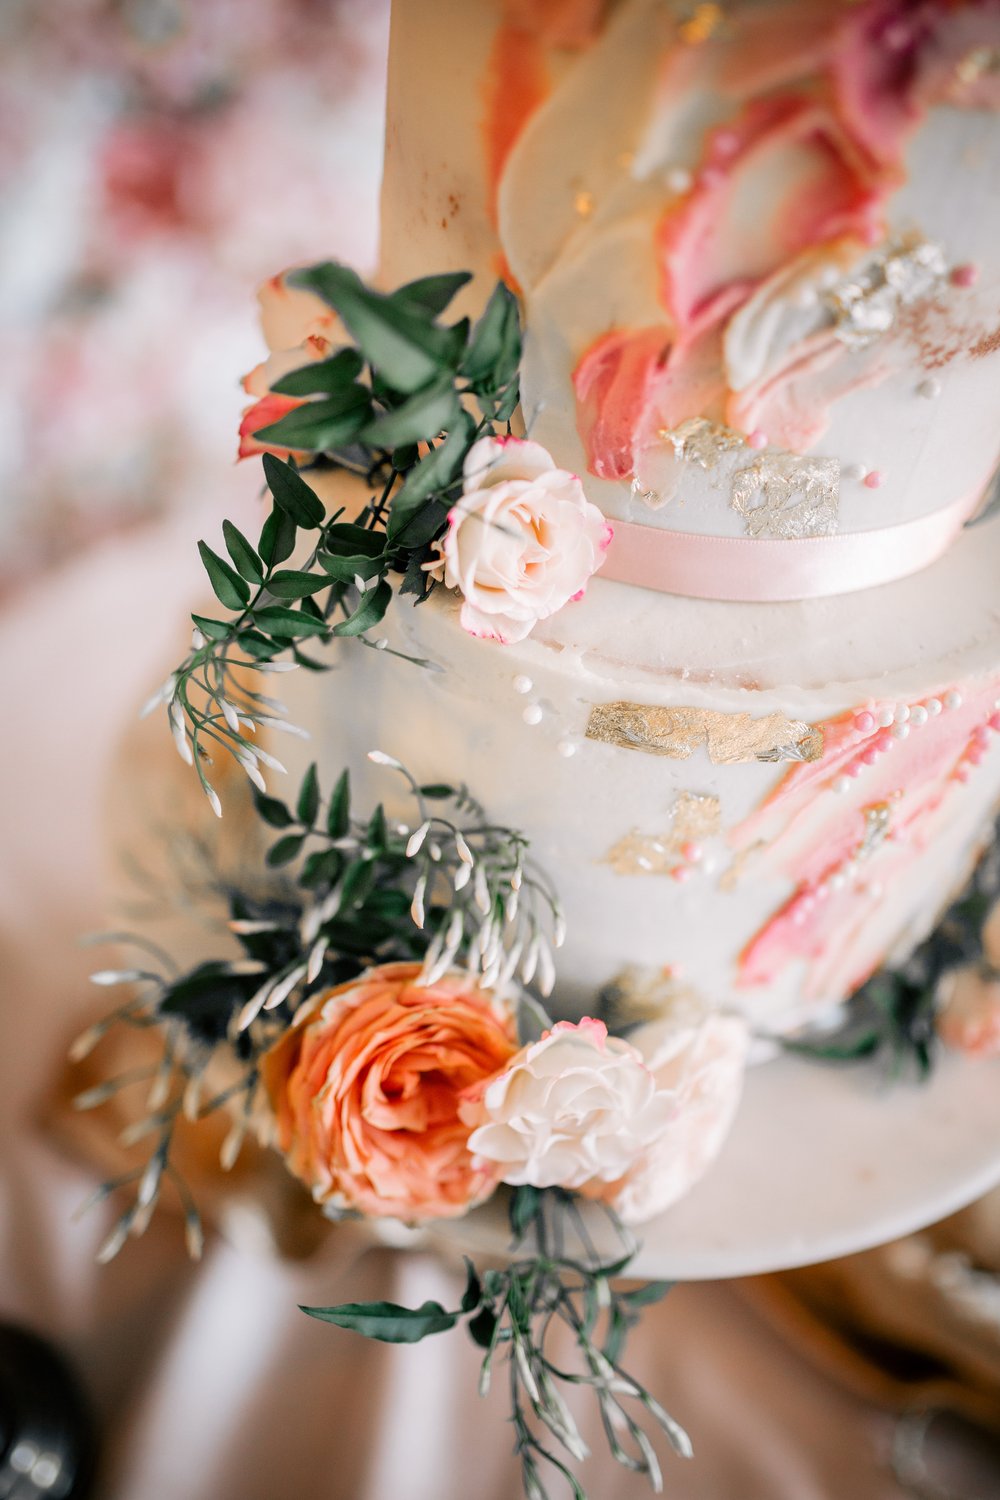 Colour popping wedding cake 